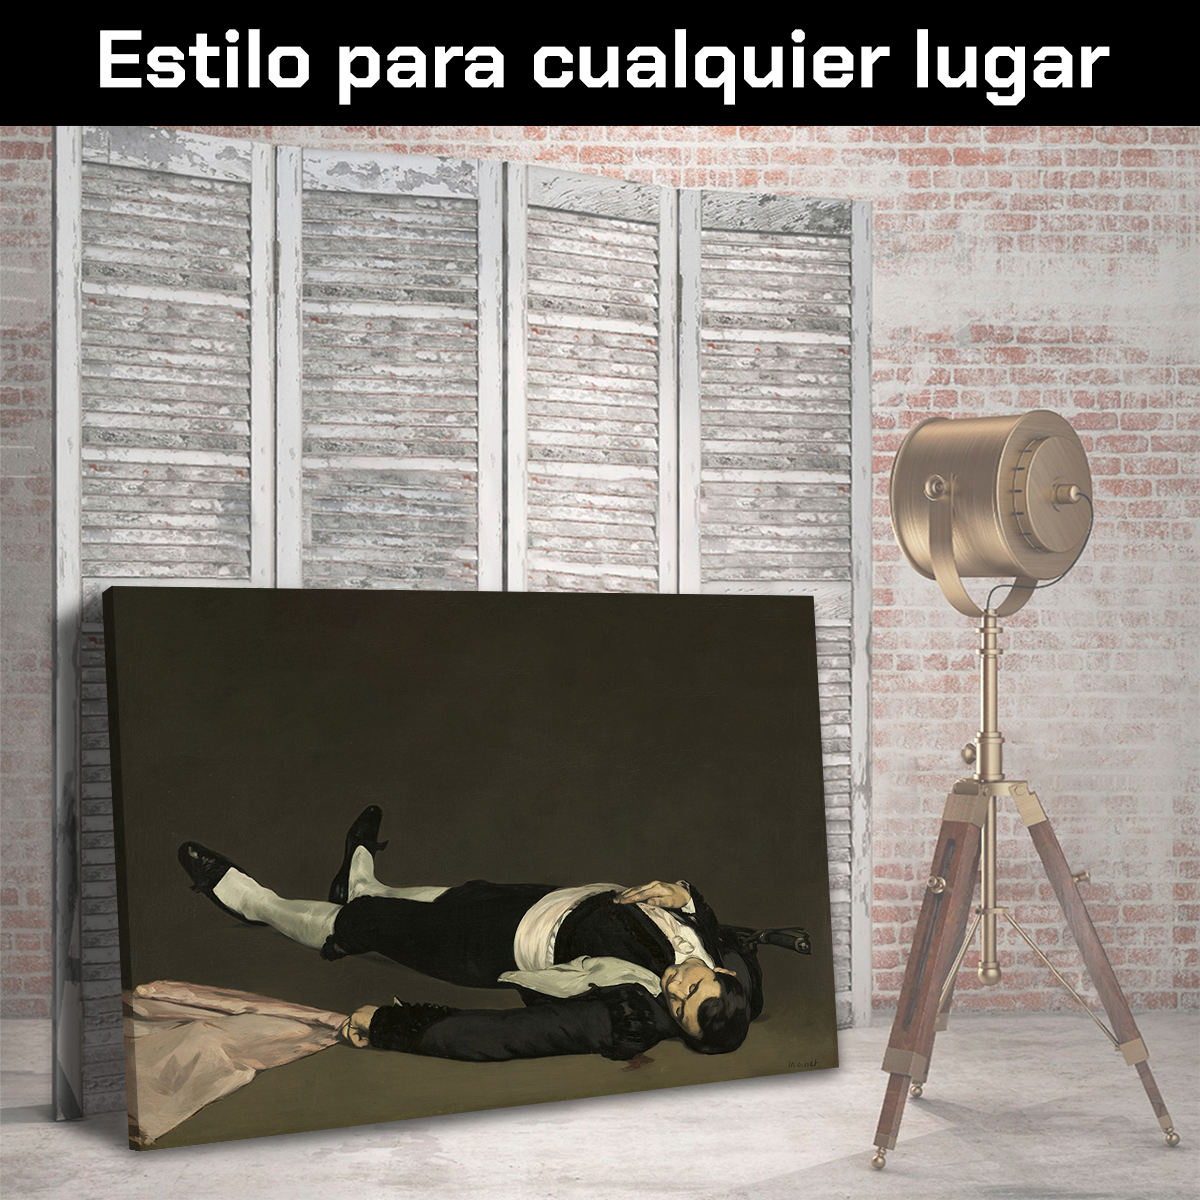 El Torero Muerto Por Edouard Manet